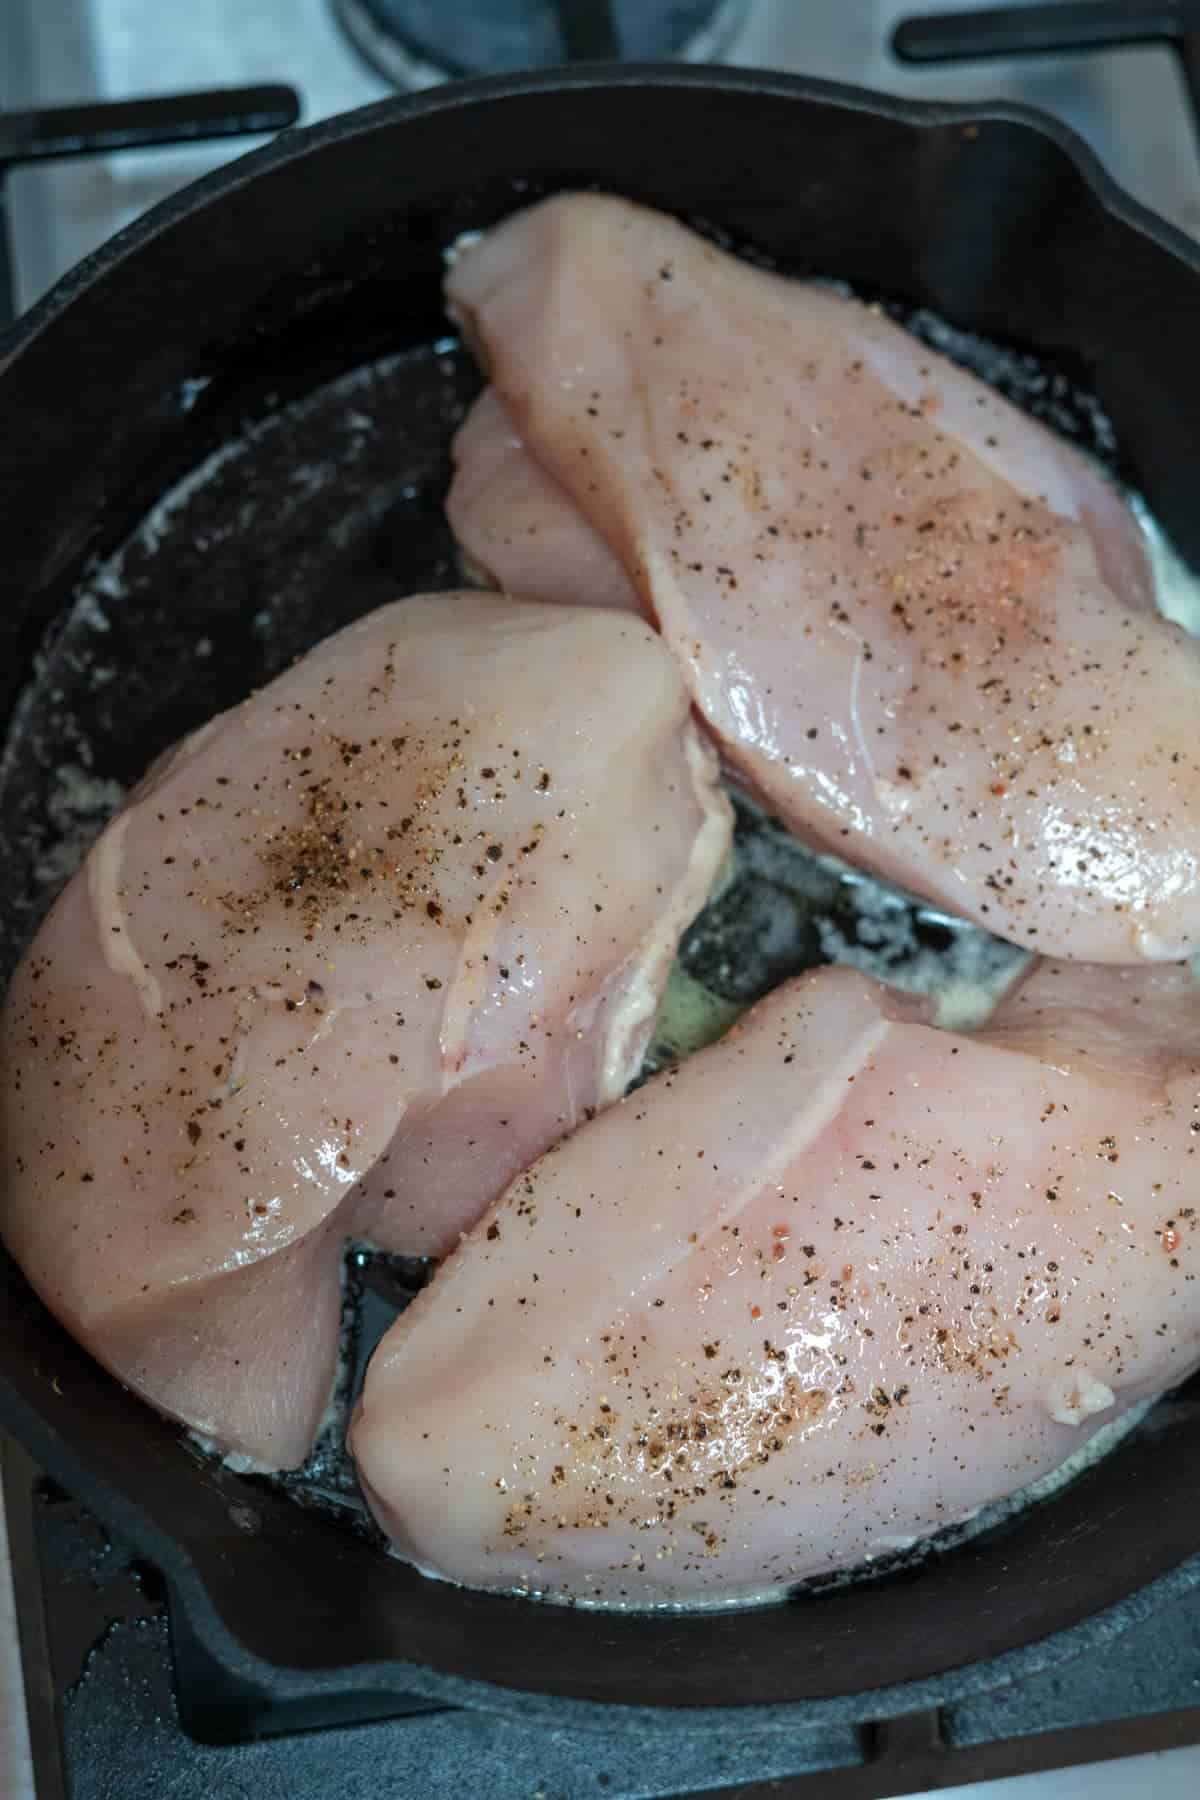 chicken breasts in skillet